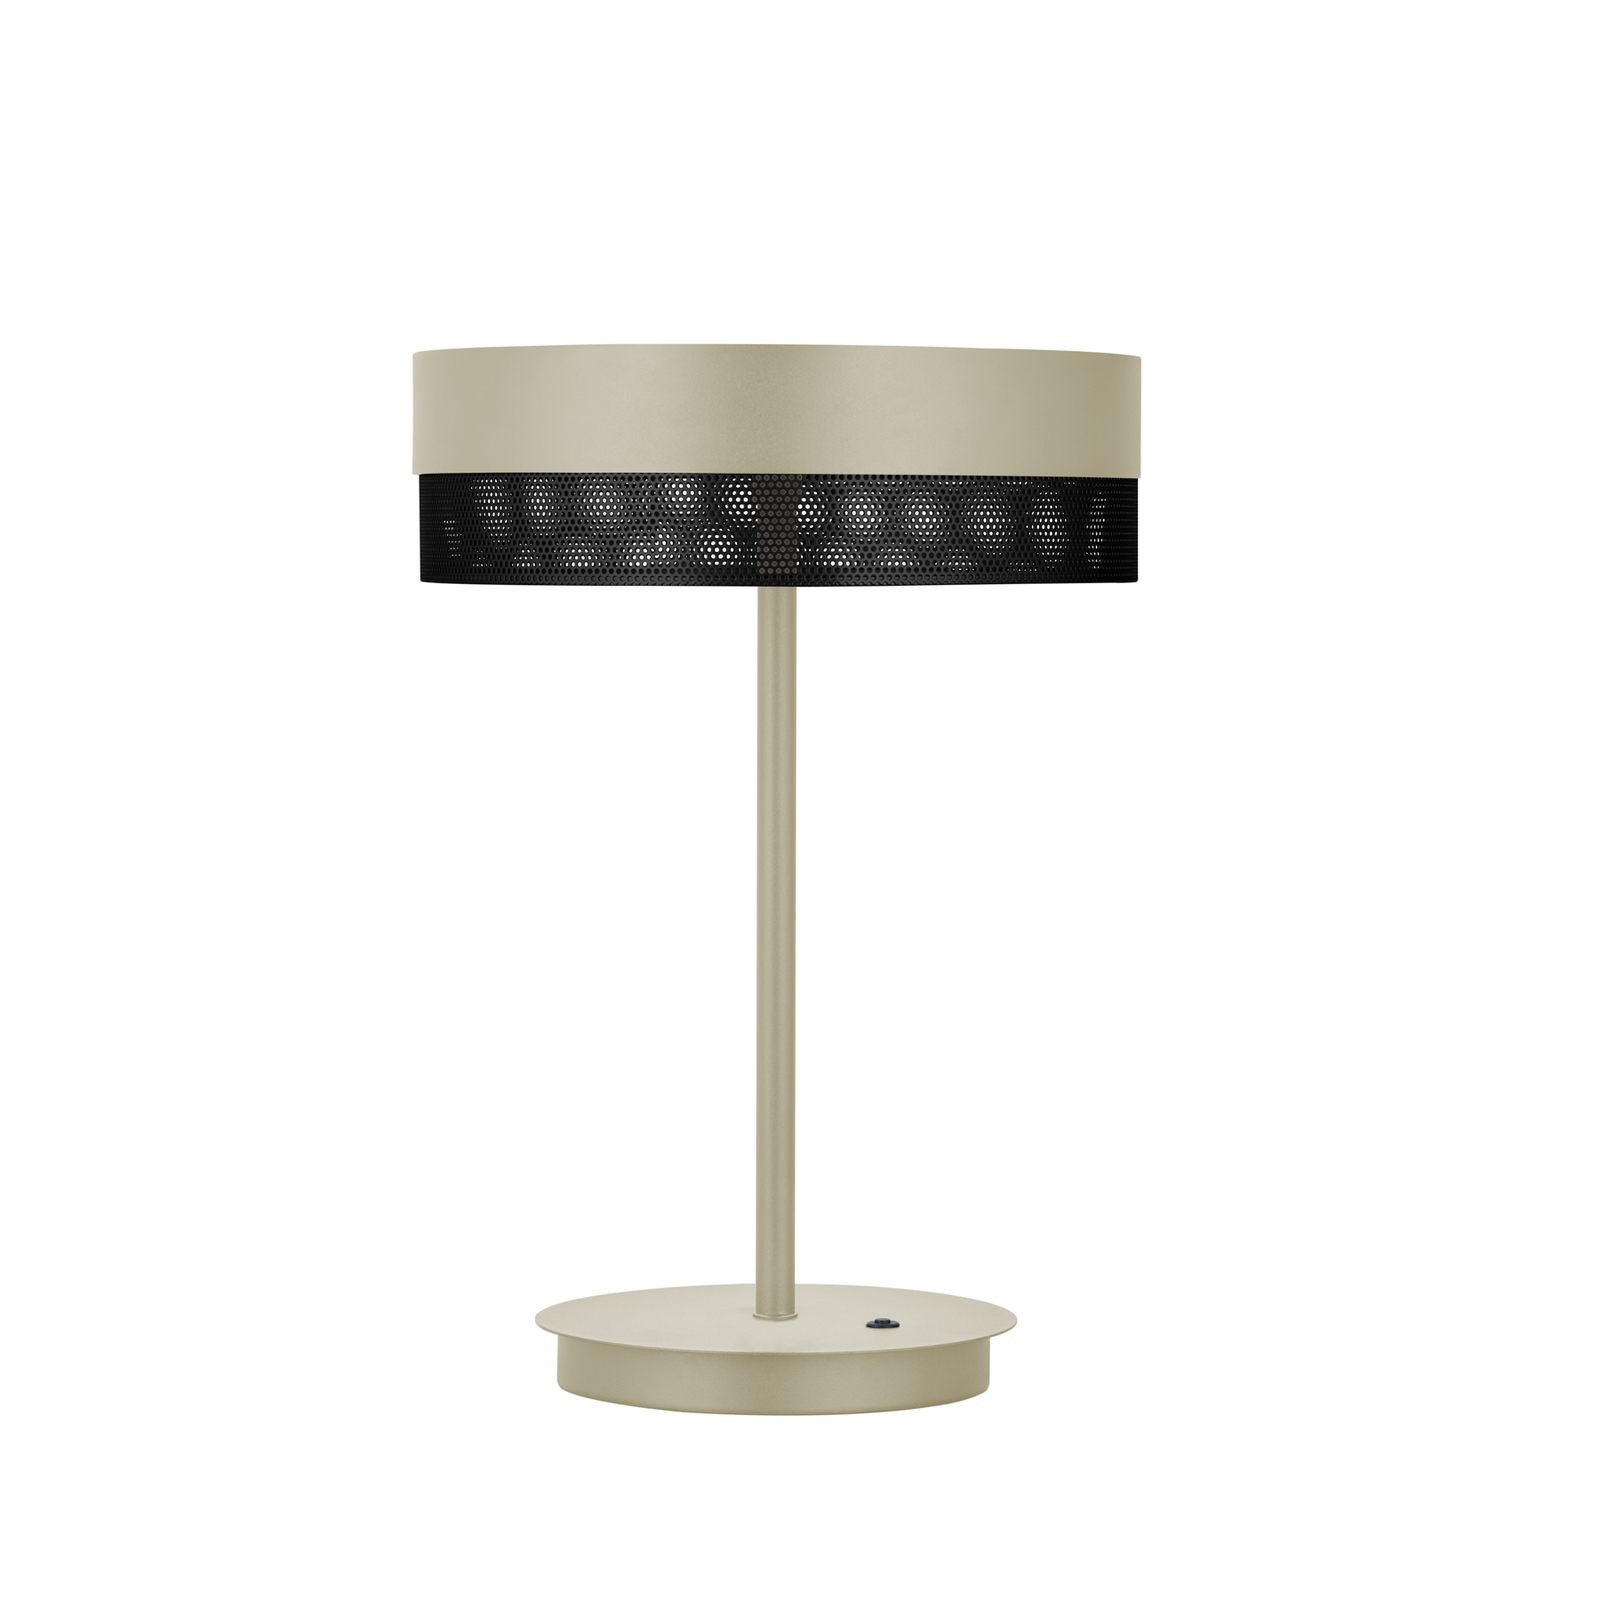 Mesh LED table lamp, 43 cm high, sand/black